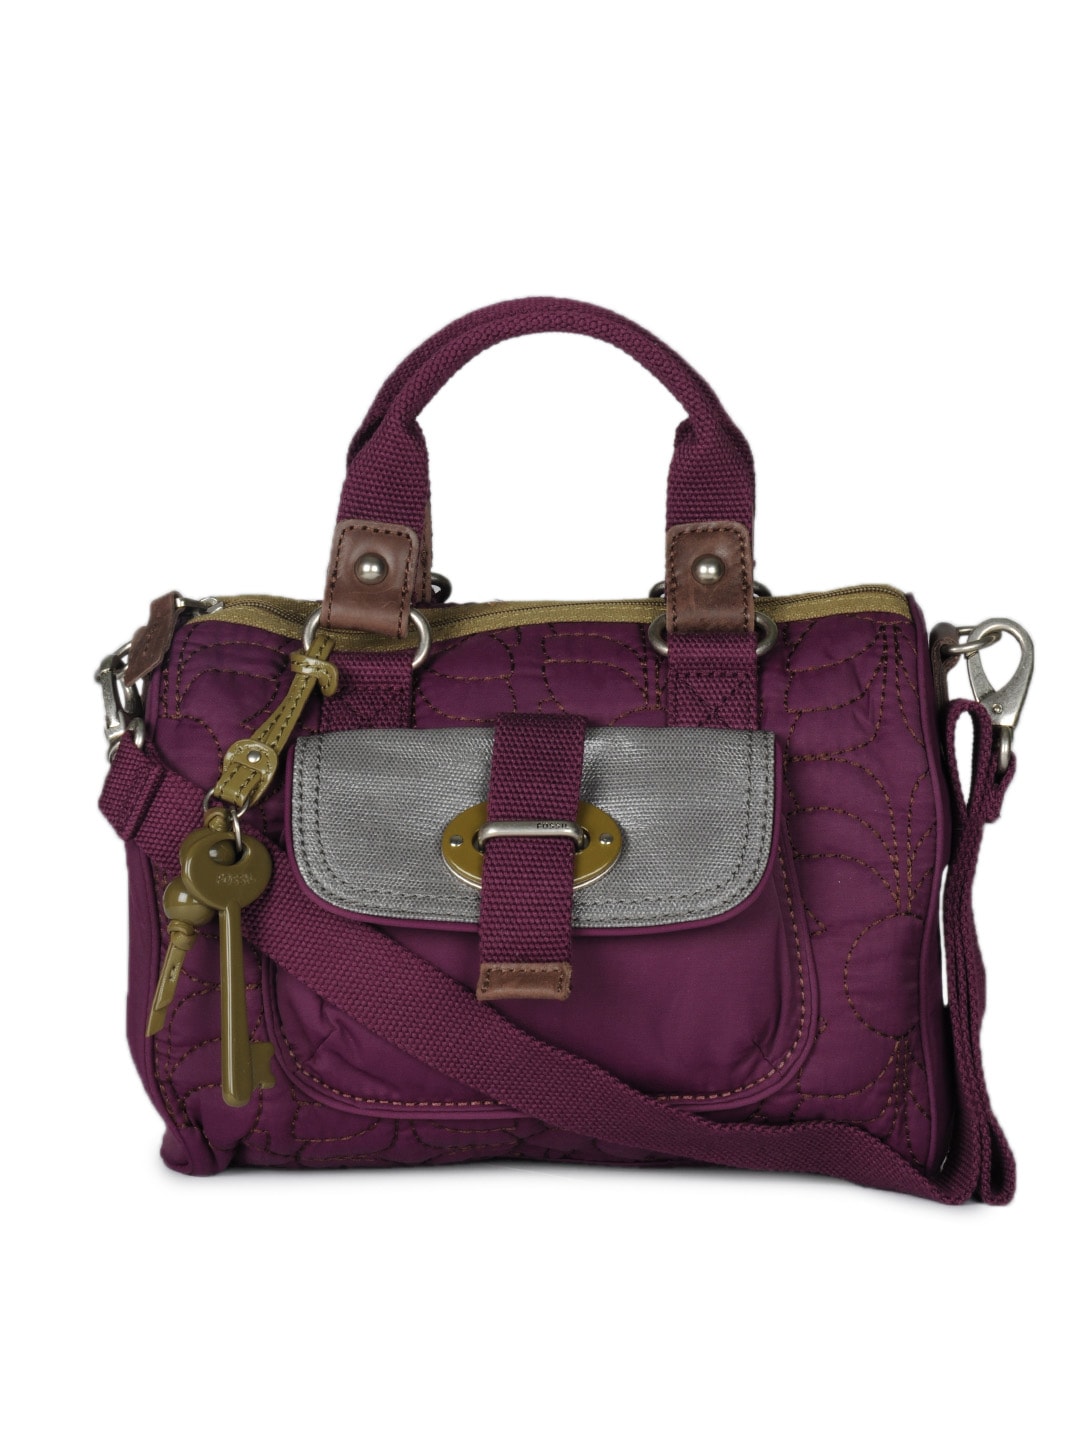 Fossil Women Purple Handbag